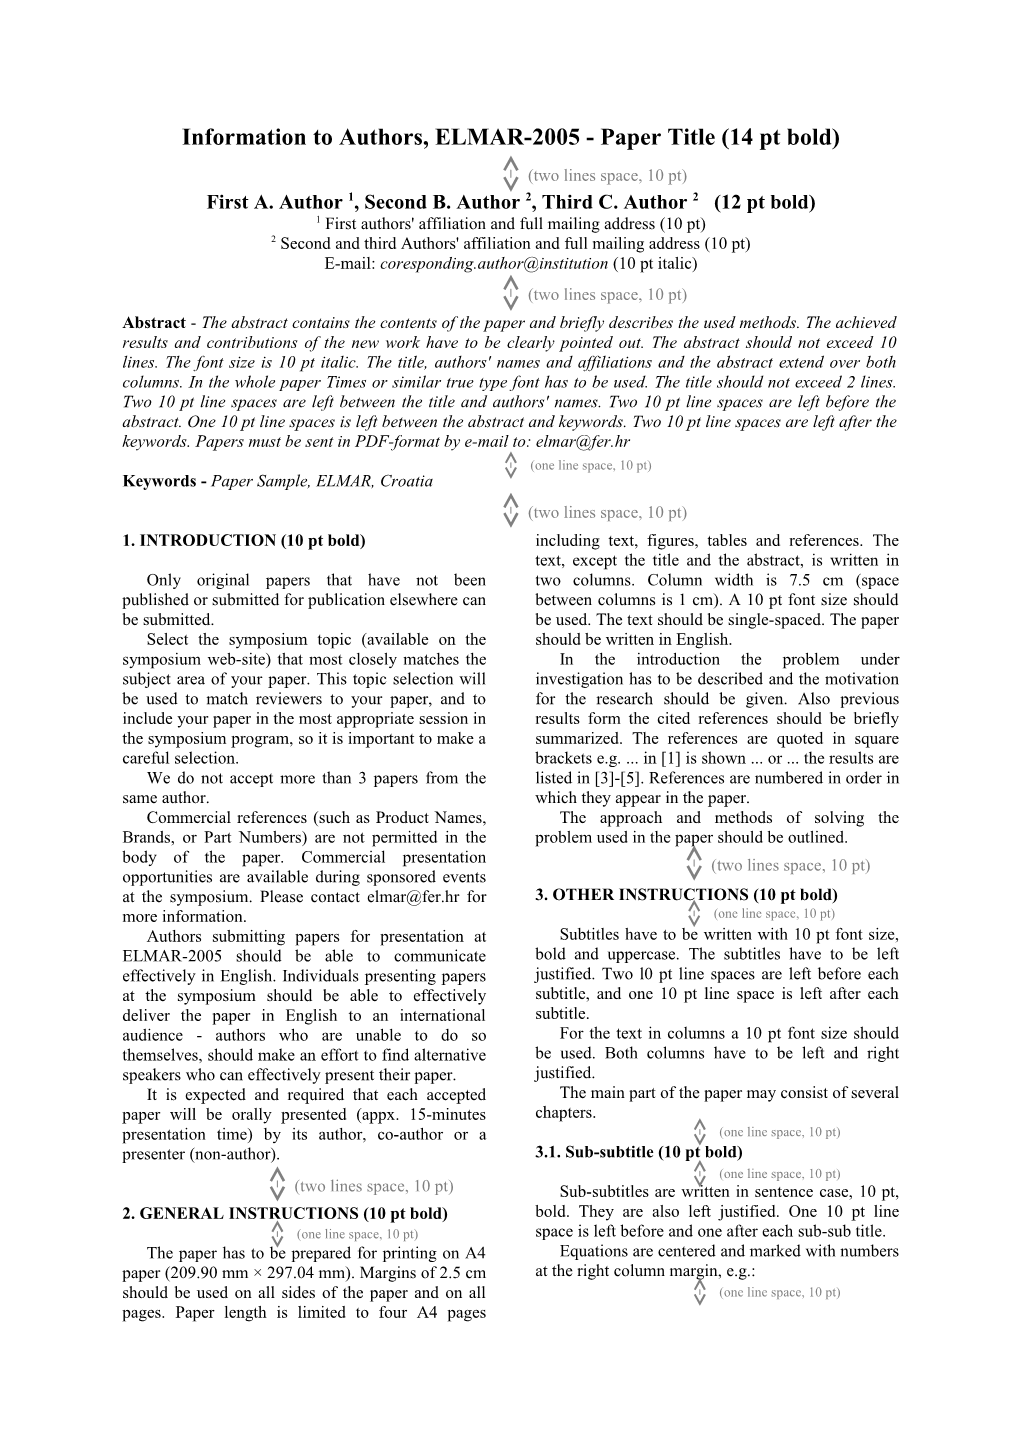 Information to Authors, ELMAR-2005 - Paper Title (14 Pt Bold)